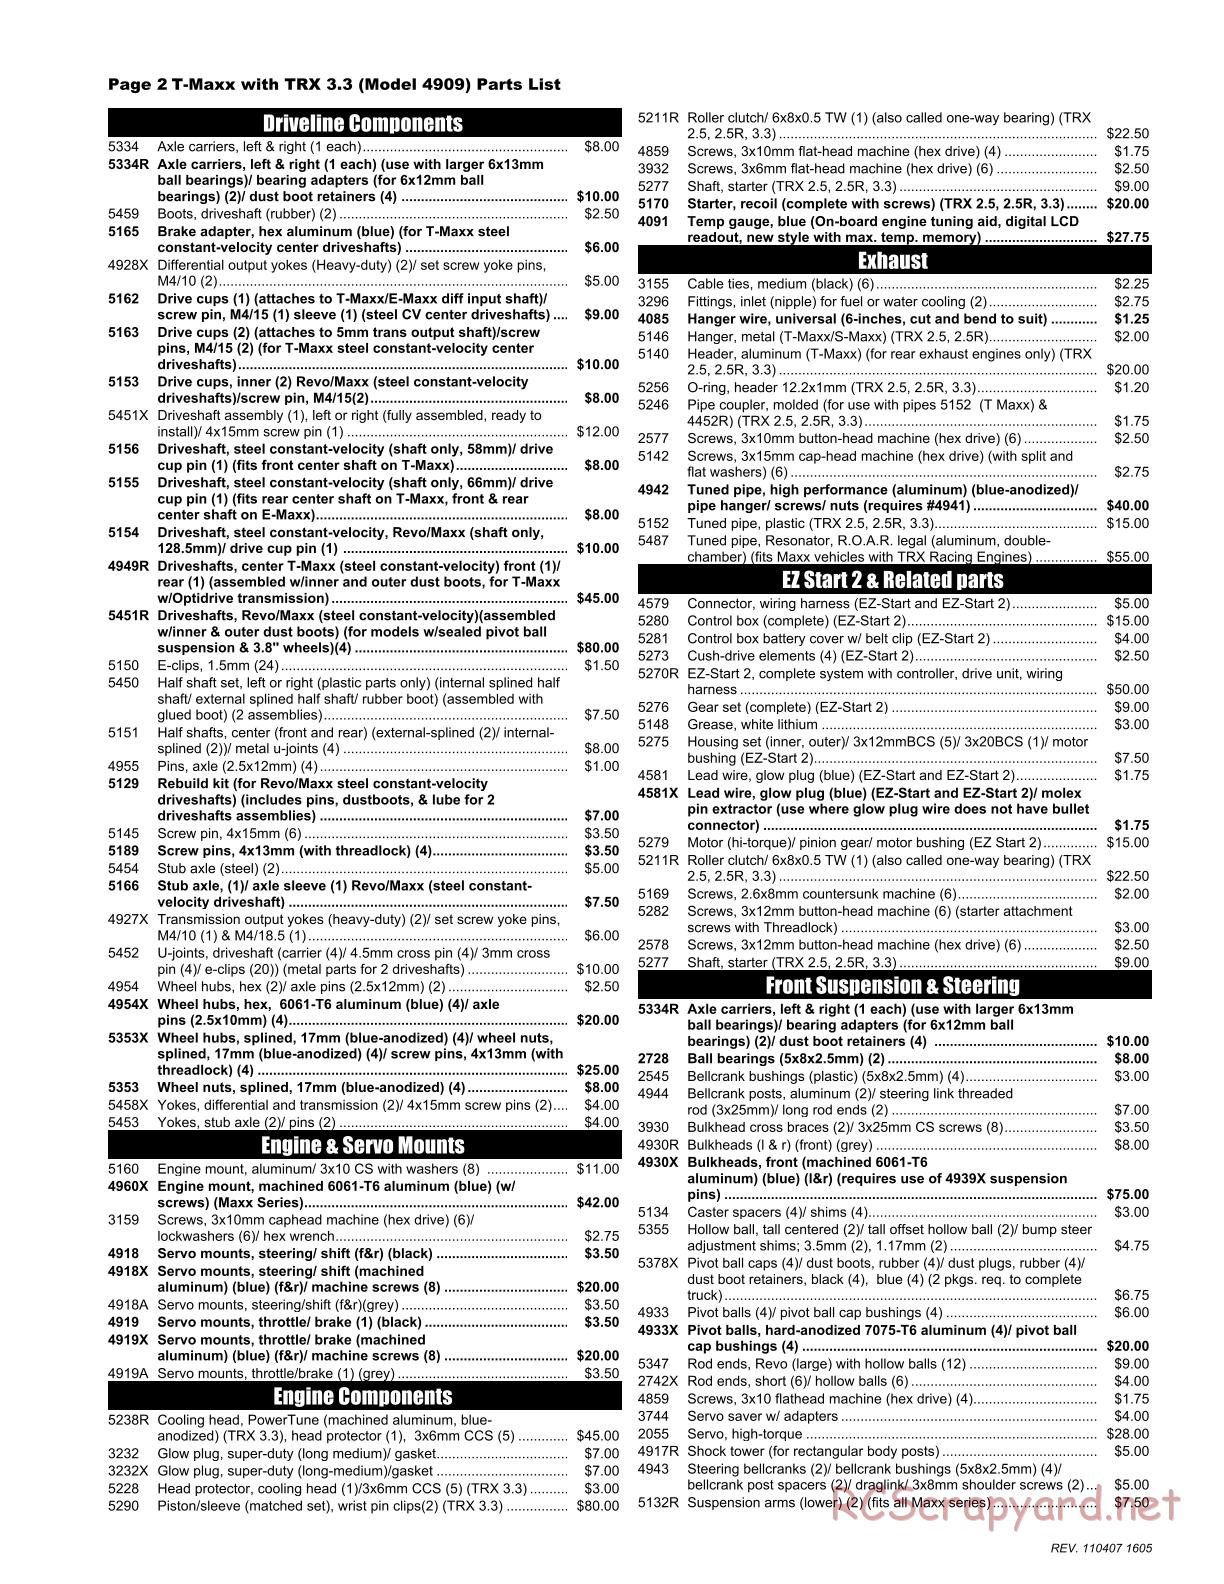 Traxxas - T-Maxx 3.3 (2006) - Parts List - Page 2